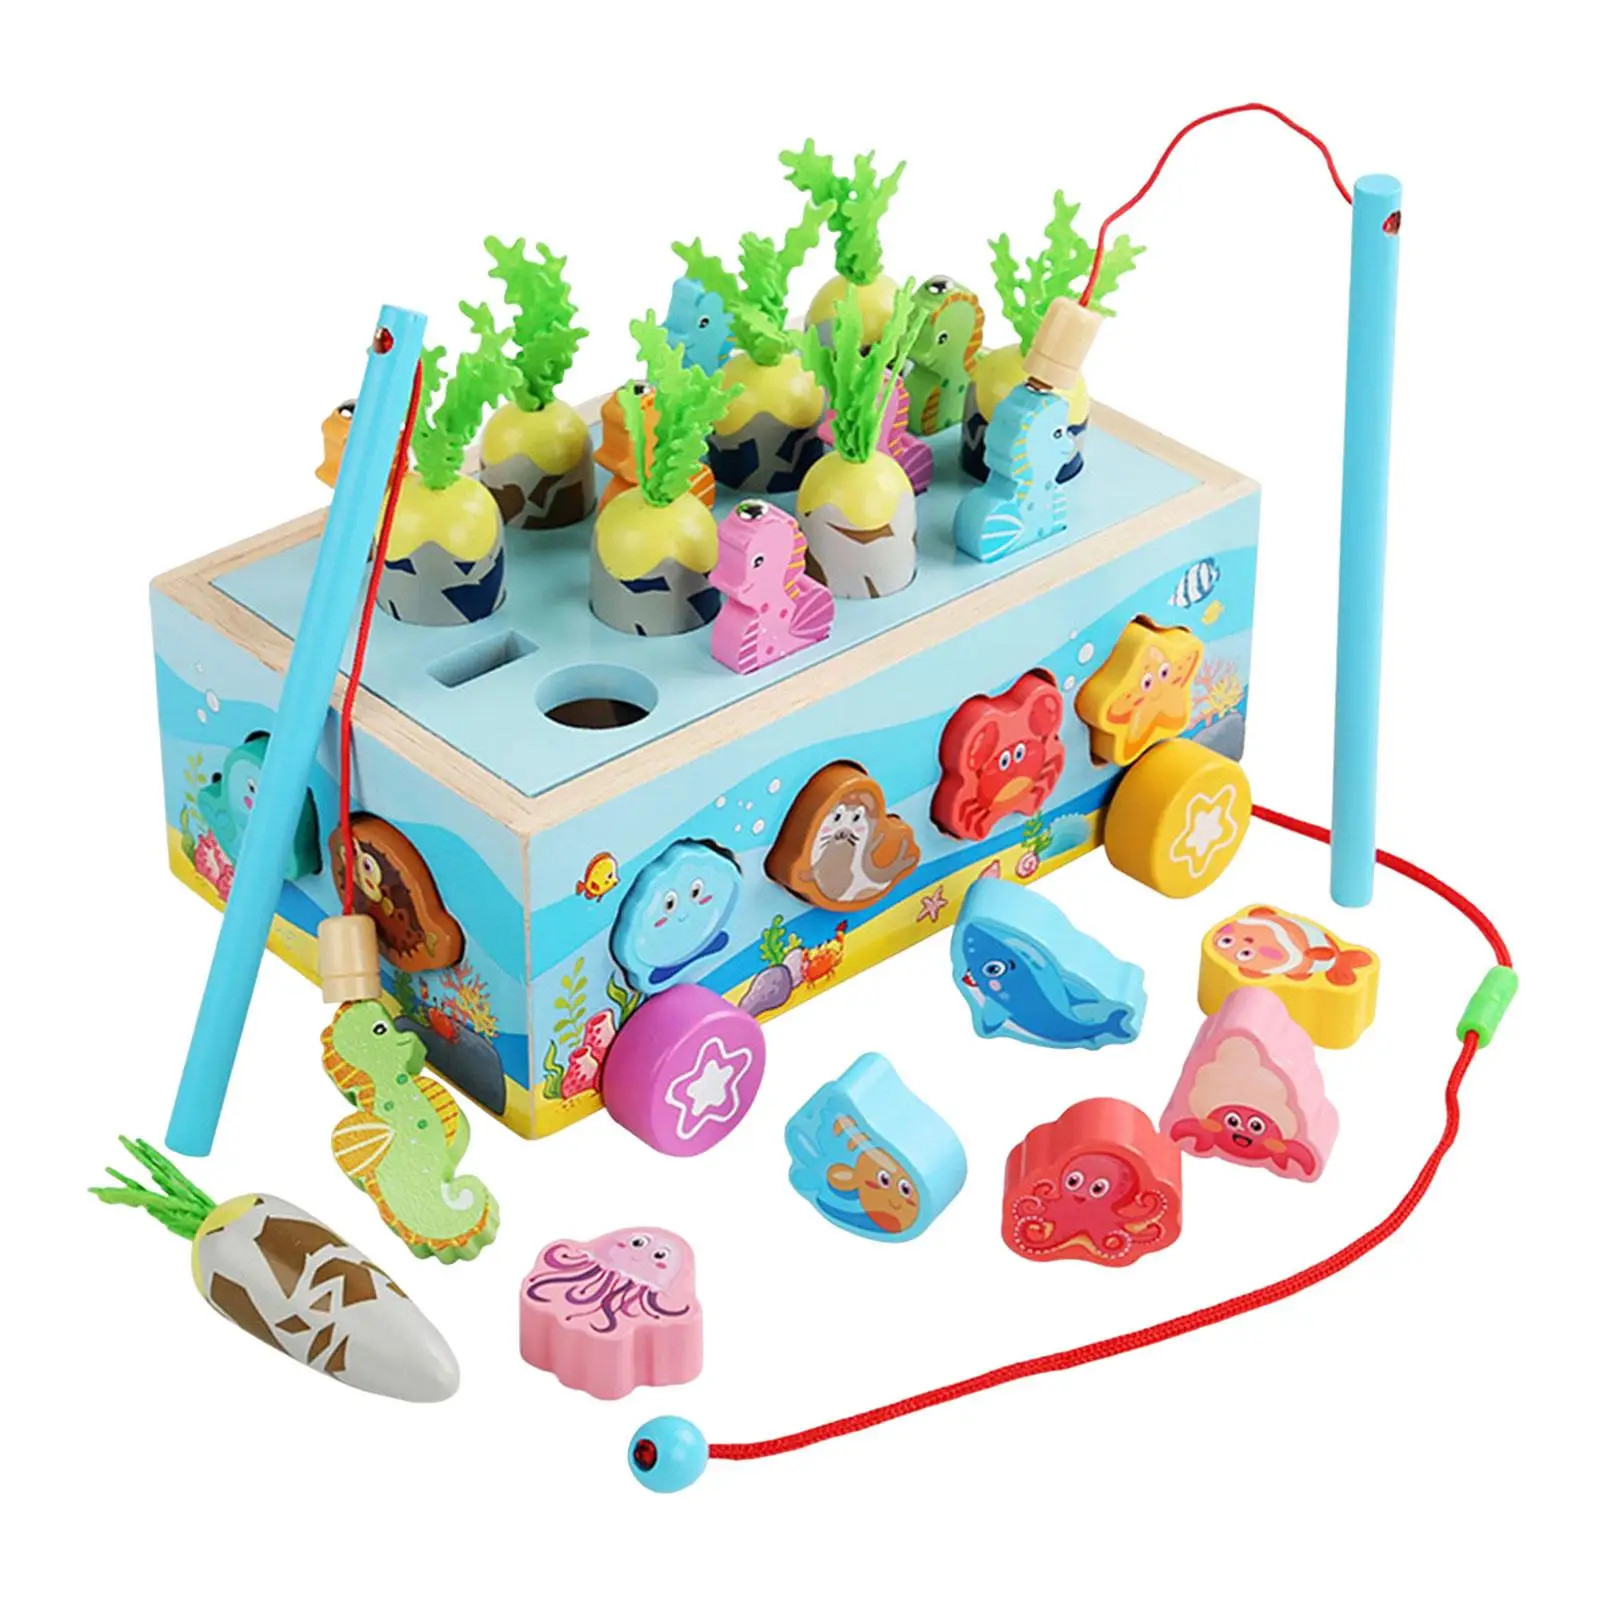 Wooden Shape Sorter Toys Fine Motor Skills Educational Toys Fishing Game Car with Animal Blocks for Gift